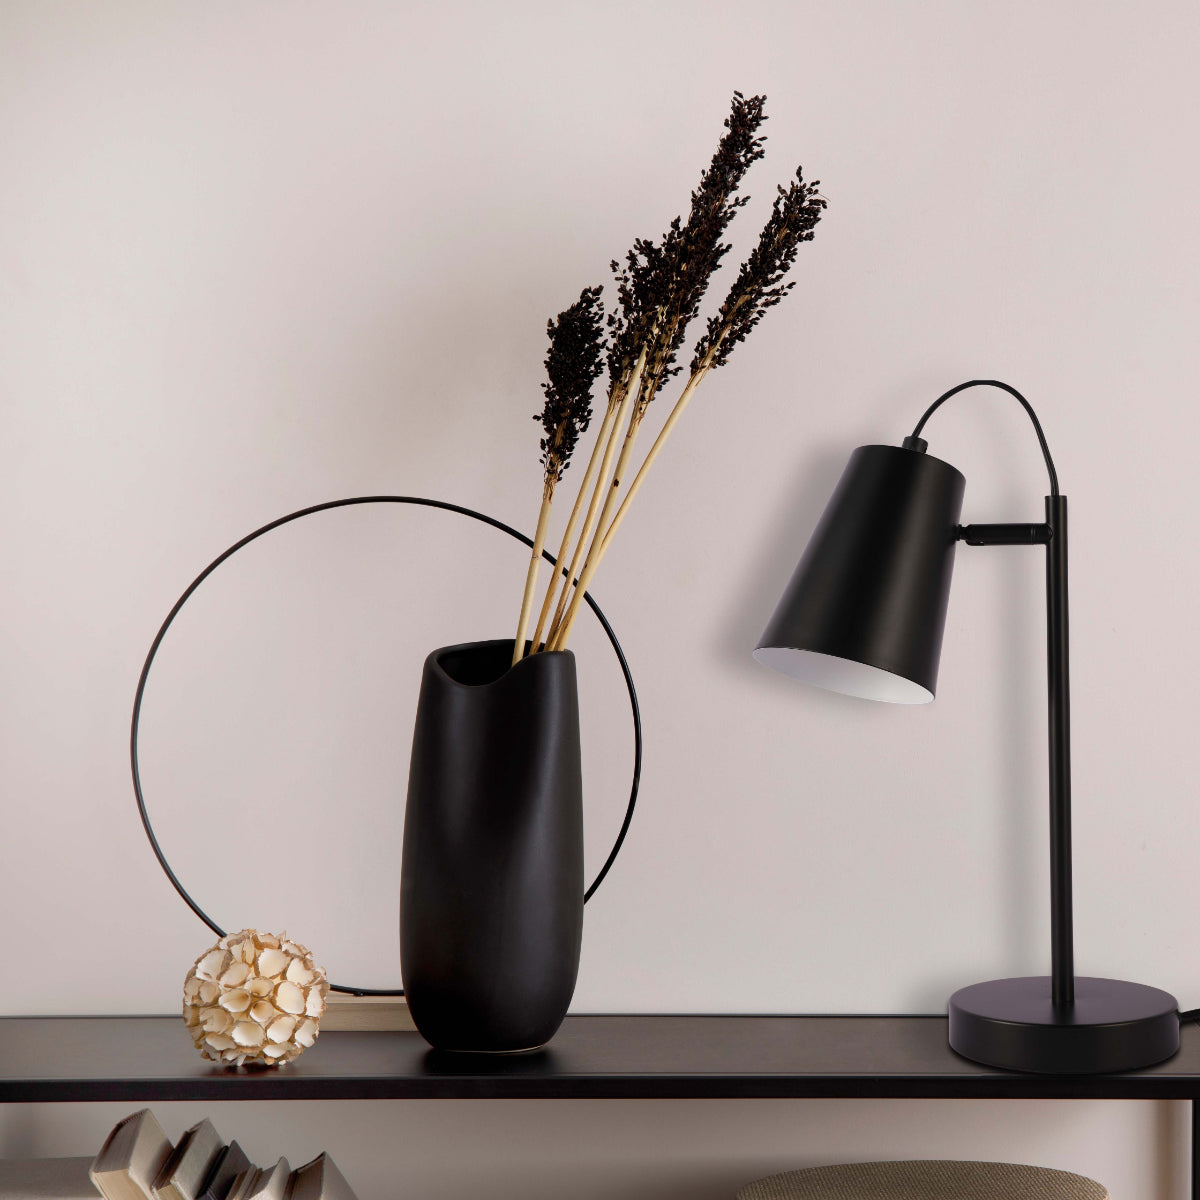 Where to use Sleek Cut Cone Desk Lamp in Vibrant Colors - Modern Elegance 130-03664